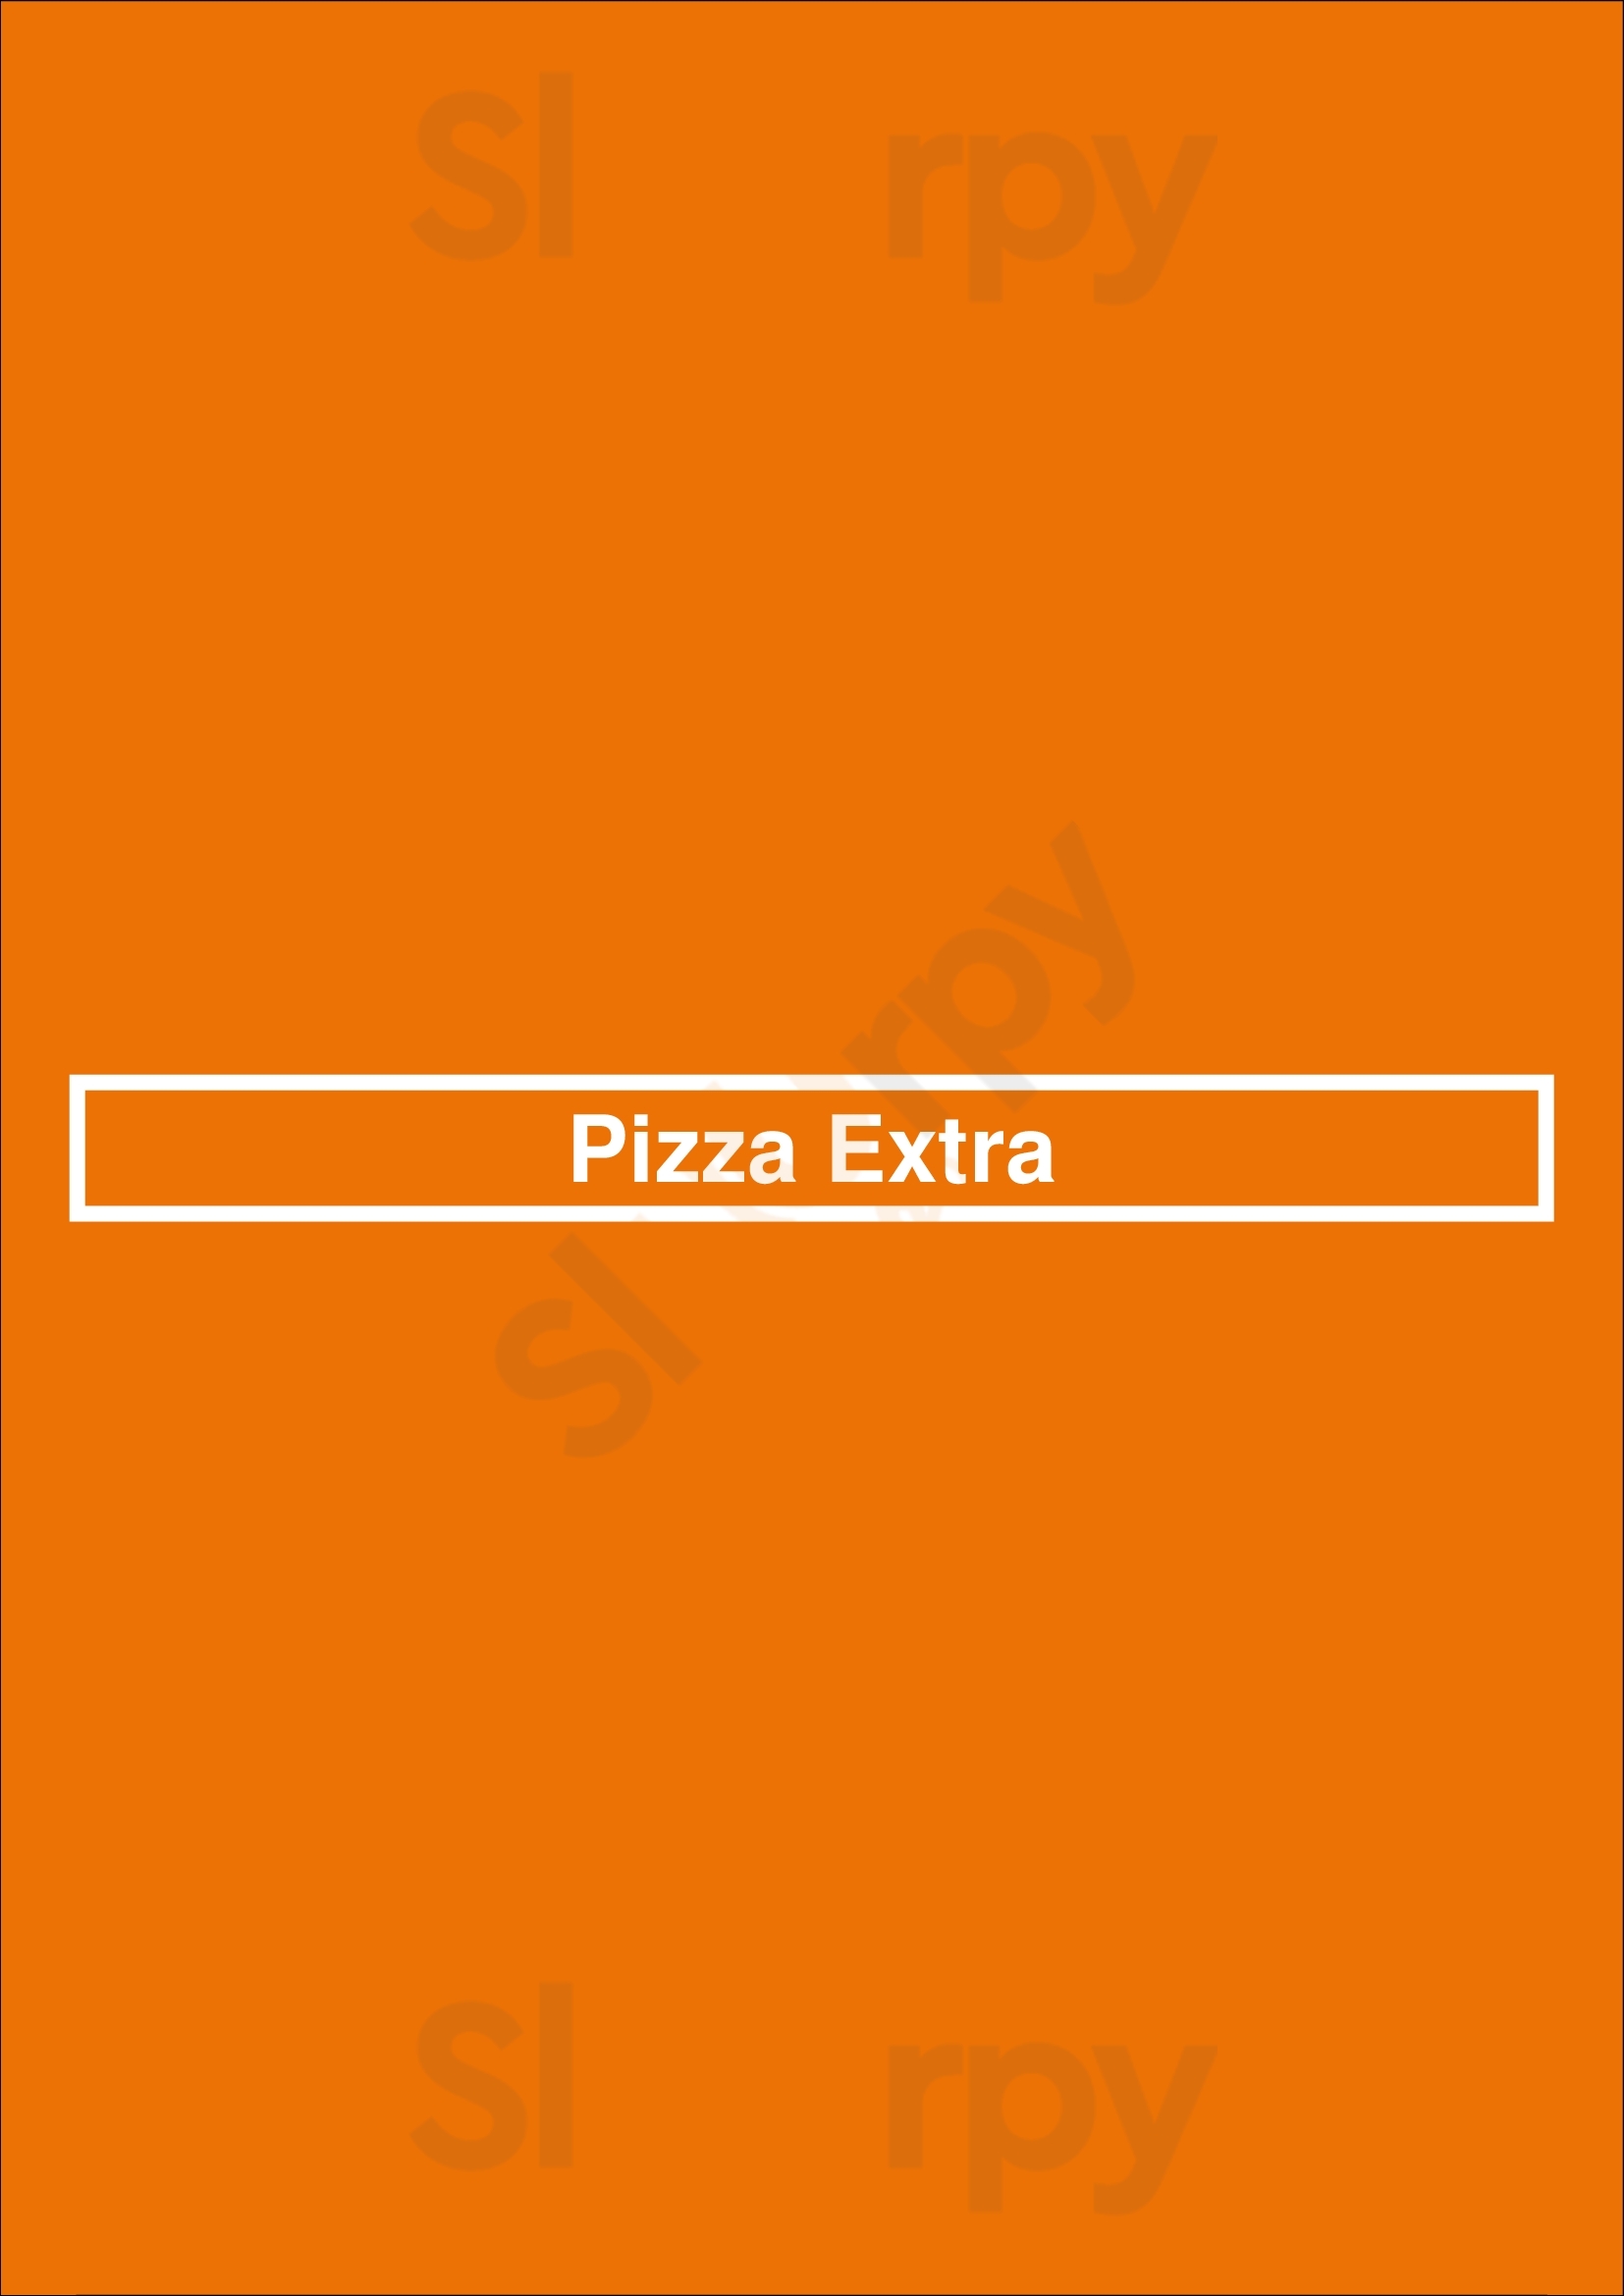 Pizza Extra Brighton Menu - 1